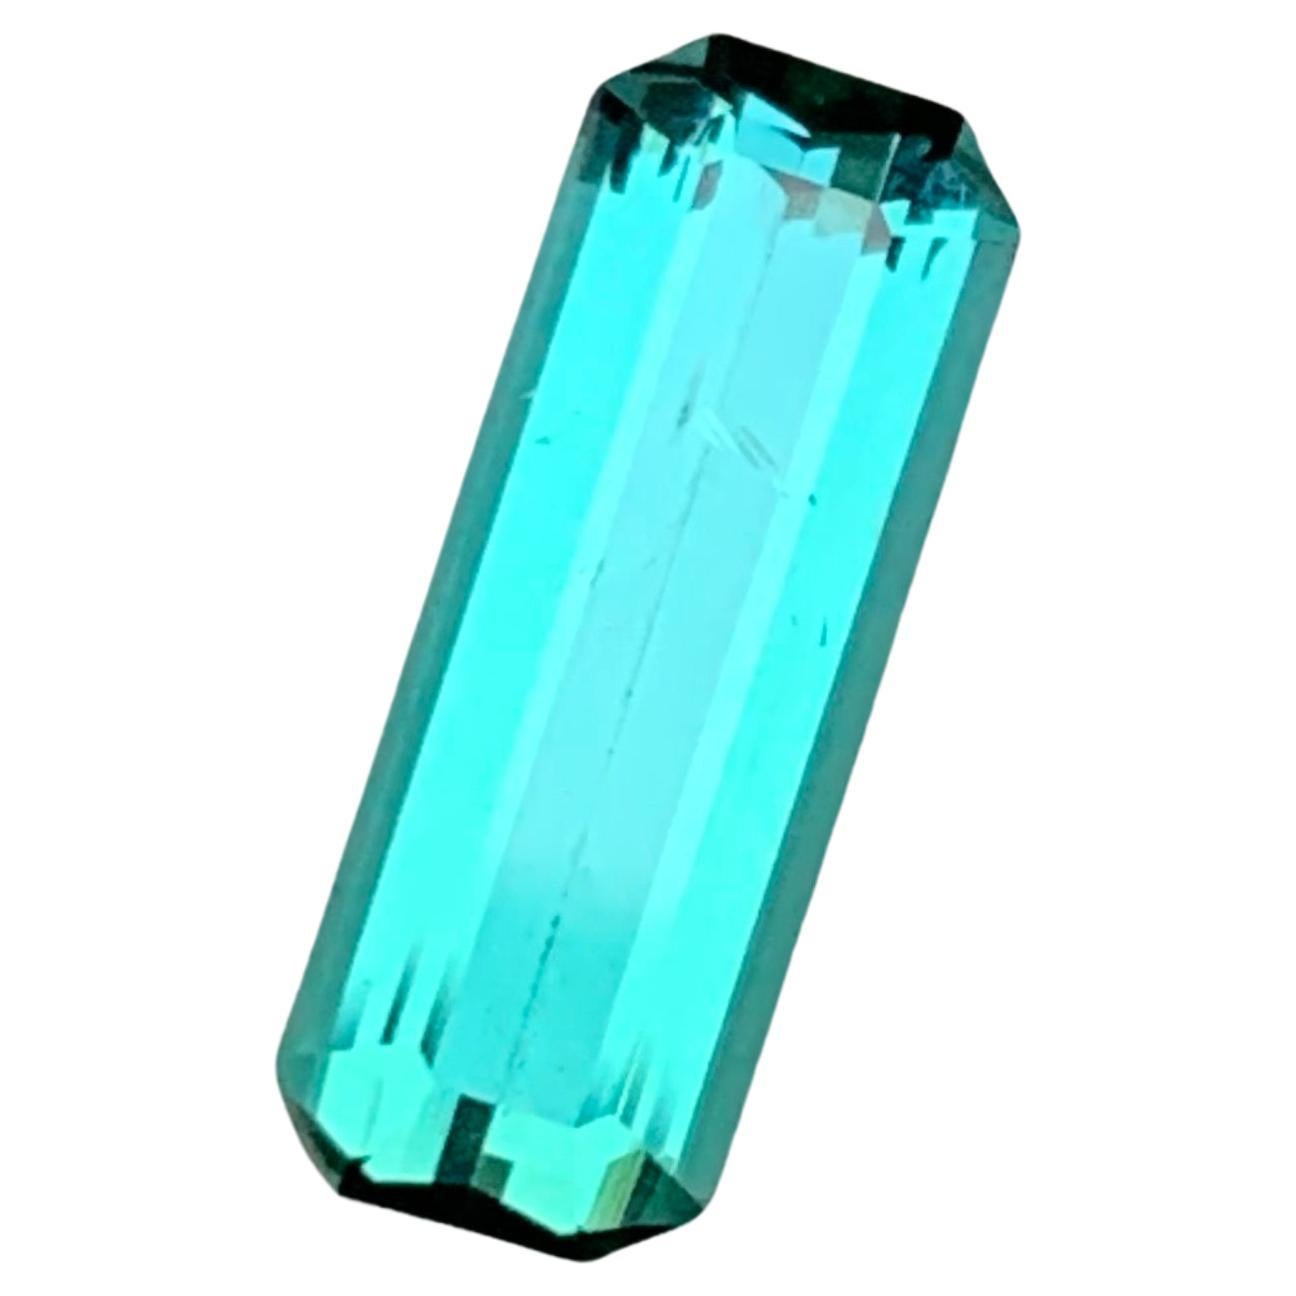 Rare Vivid Neon Bluish Green Hue Tourmaline Gemstone 1.75Ct Emerald Cut for Ring For Sale